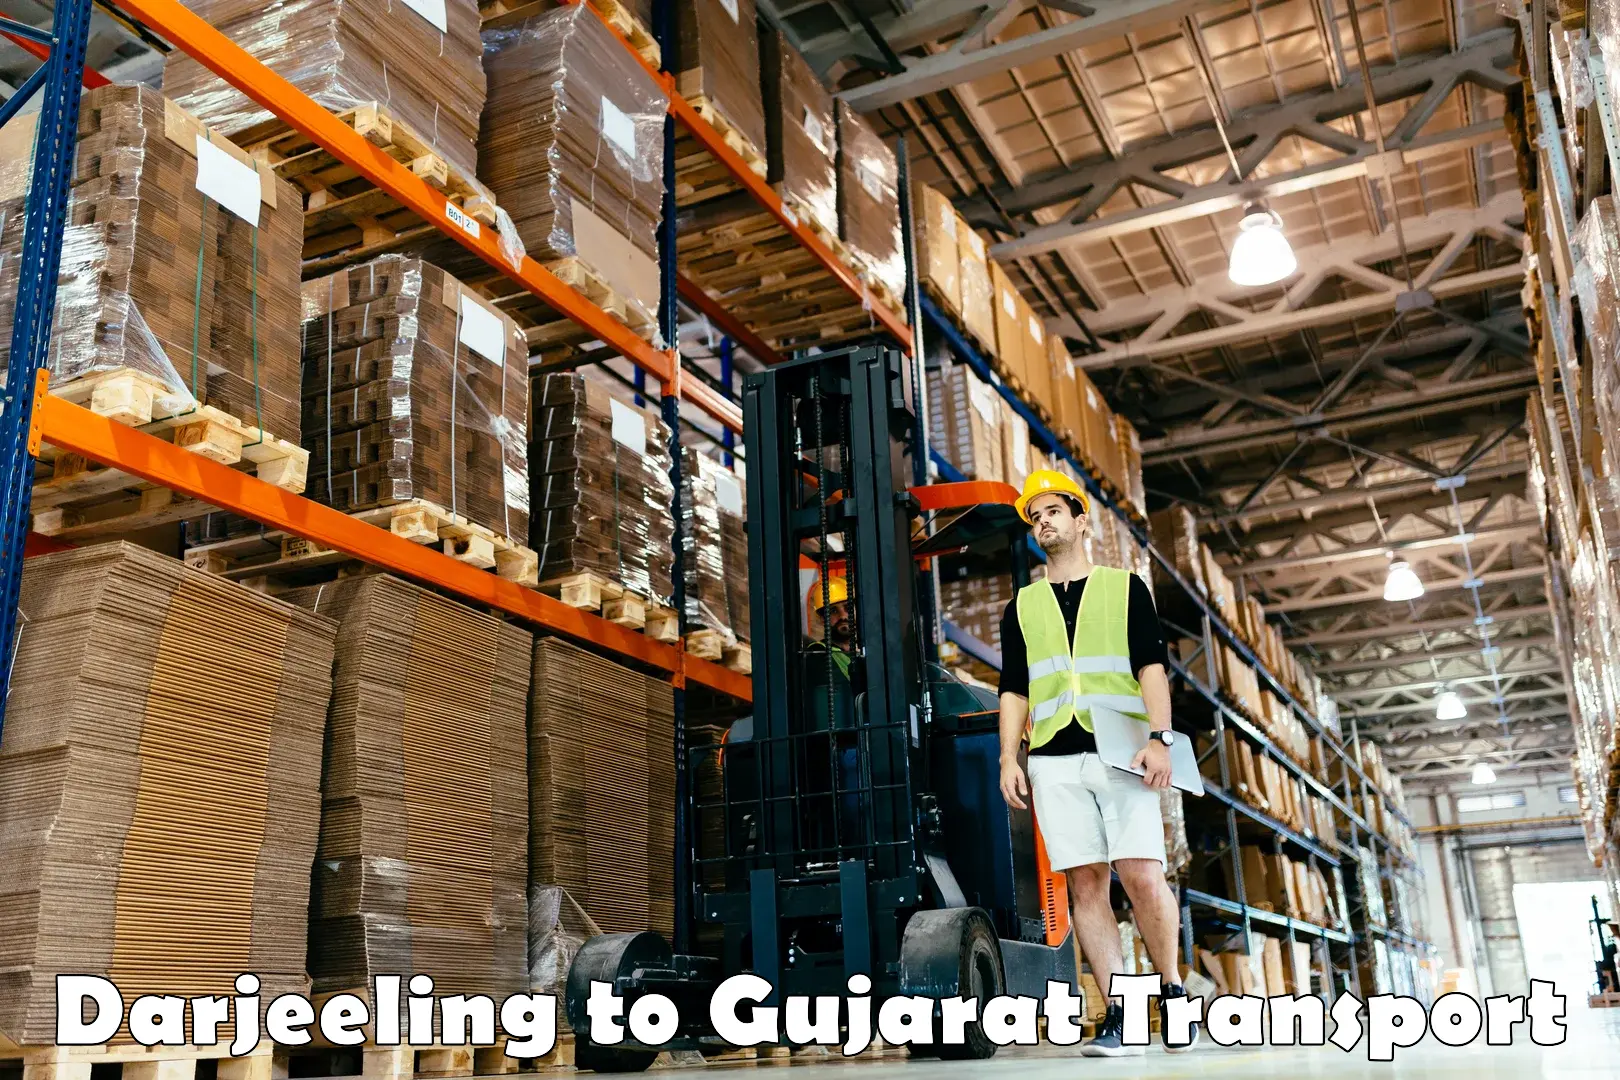 Goods delivery service Darjeeling to Gujarat